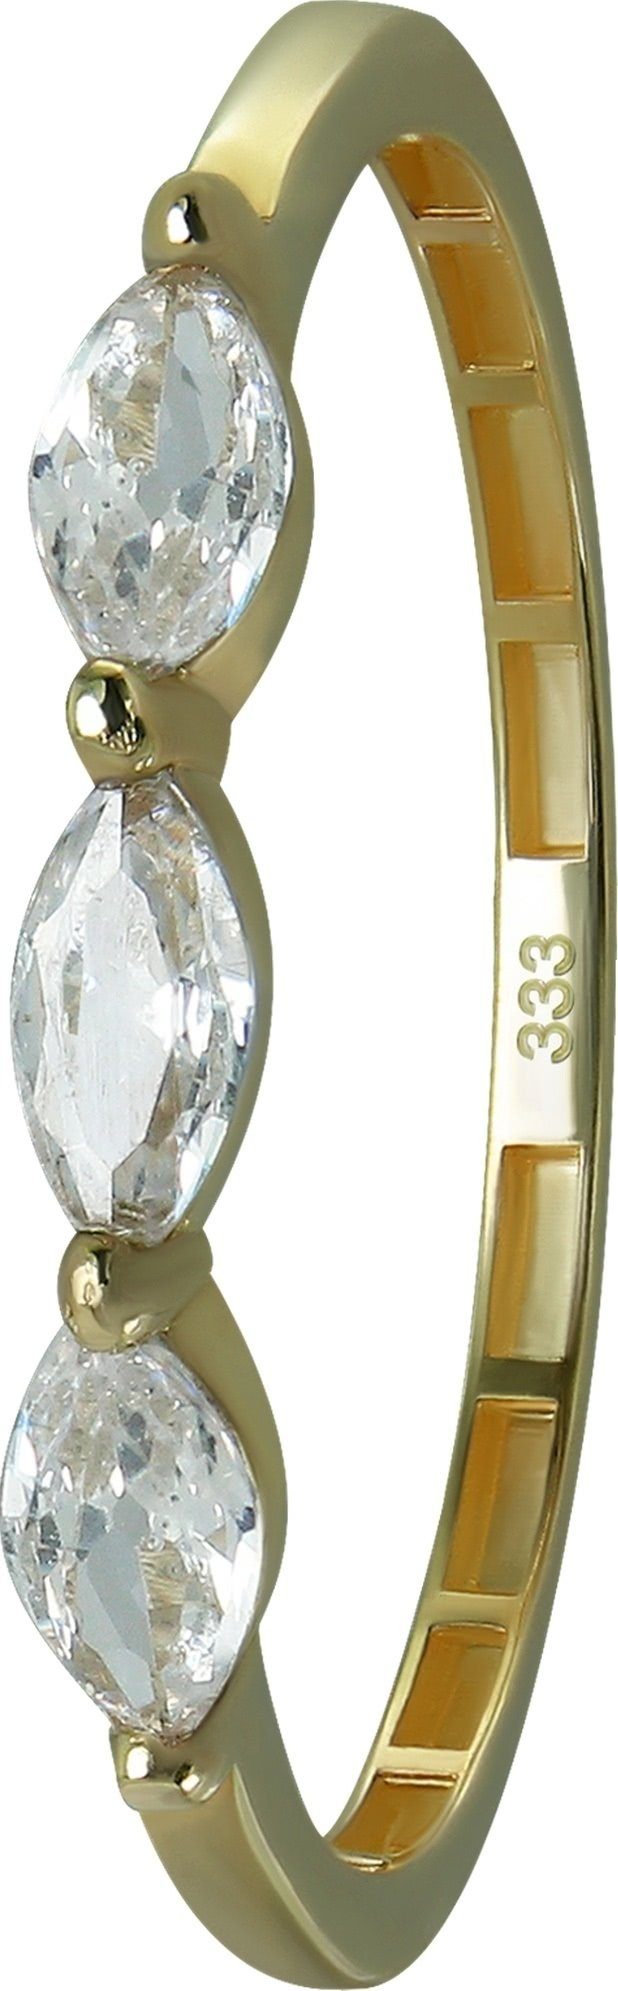 GoldDream Goldring GoldDream Gold Ring Shine Gr.58 Zirkonia (Fingerring), Damen Ring Shine 333 Gelbgold - 8 Karat, Farbe: gold, weiß